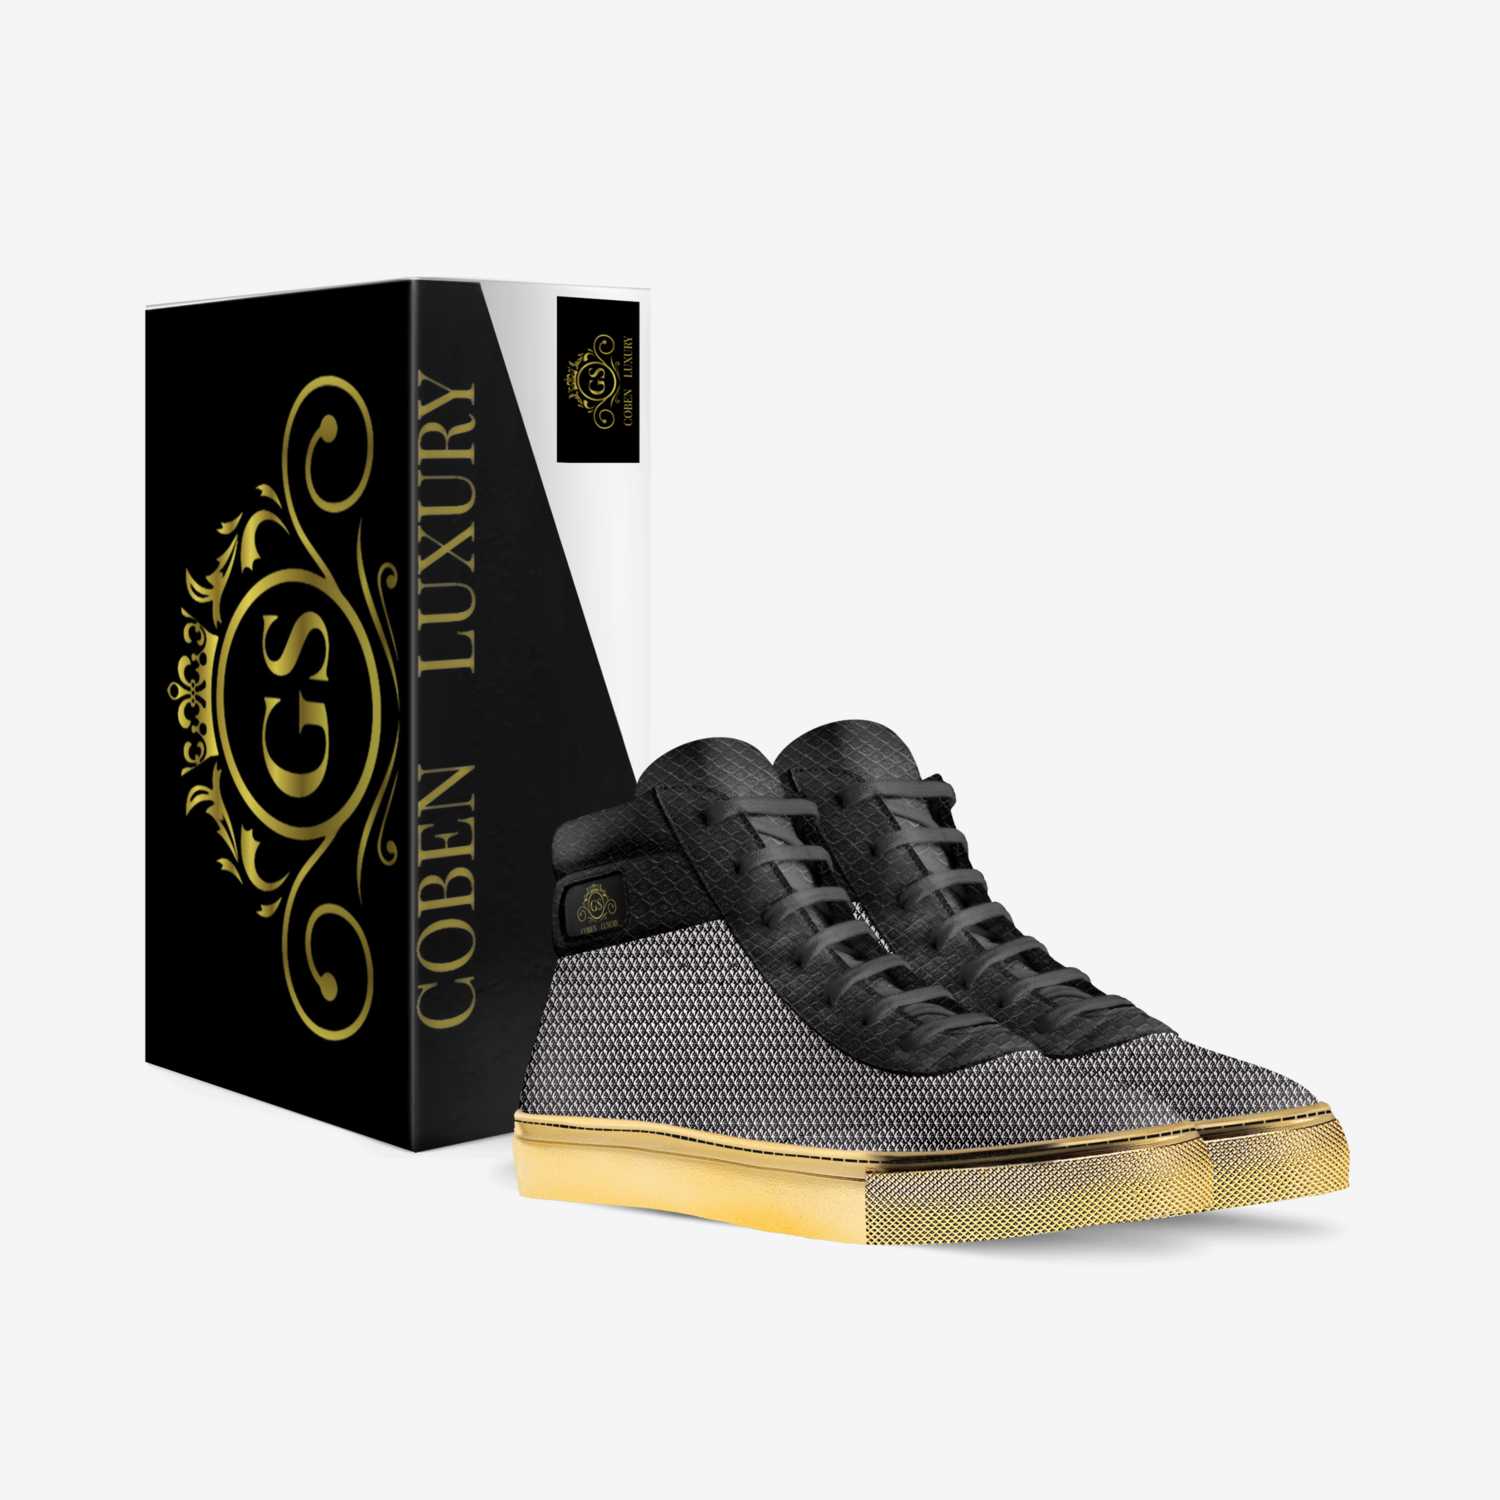 GIO SERRATORE LUX custom made in Italy shoes by Costa Cobenpolo | Box view